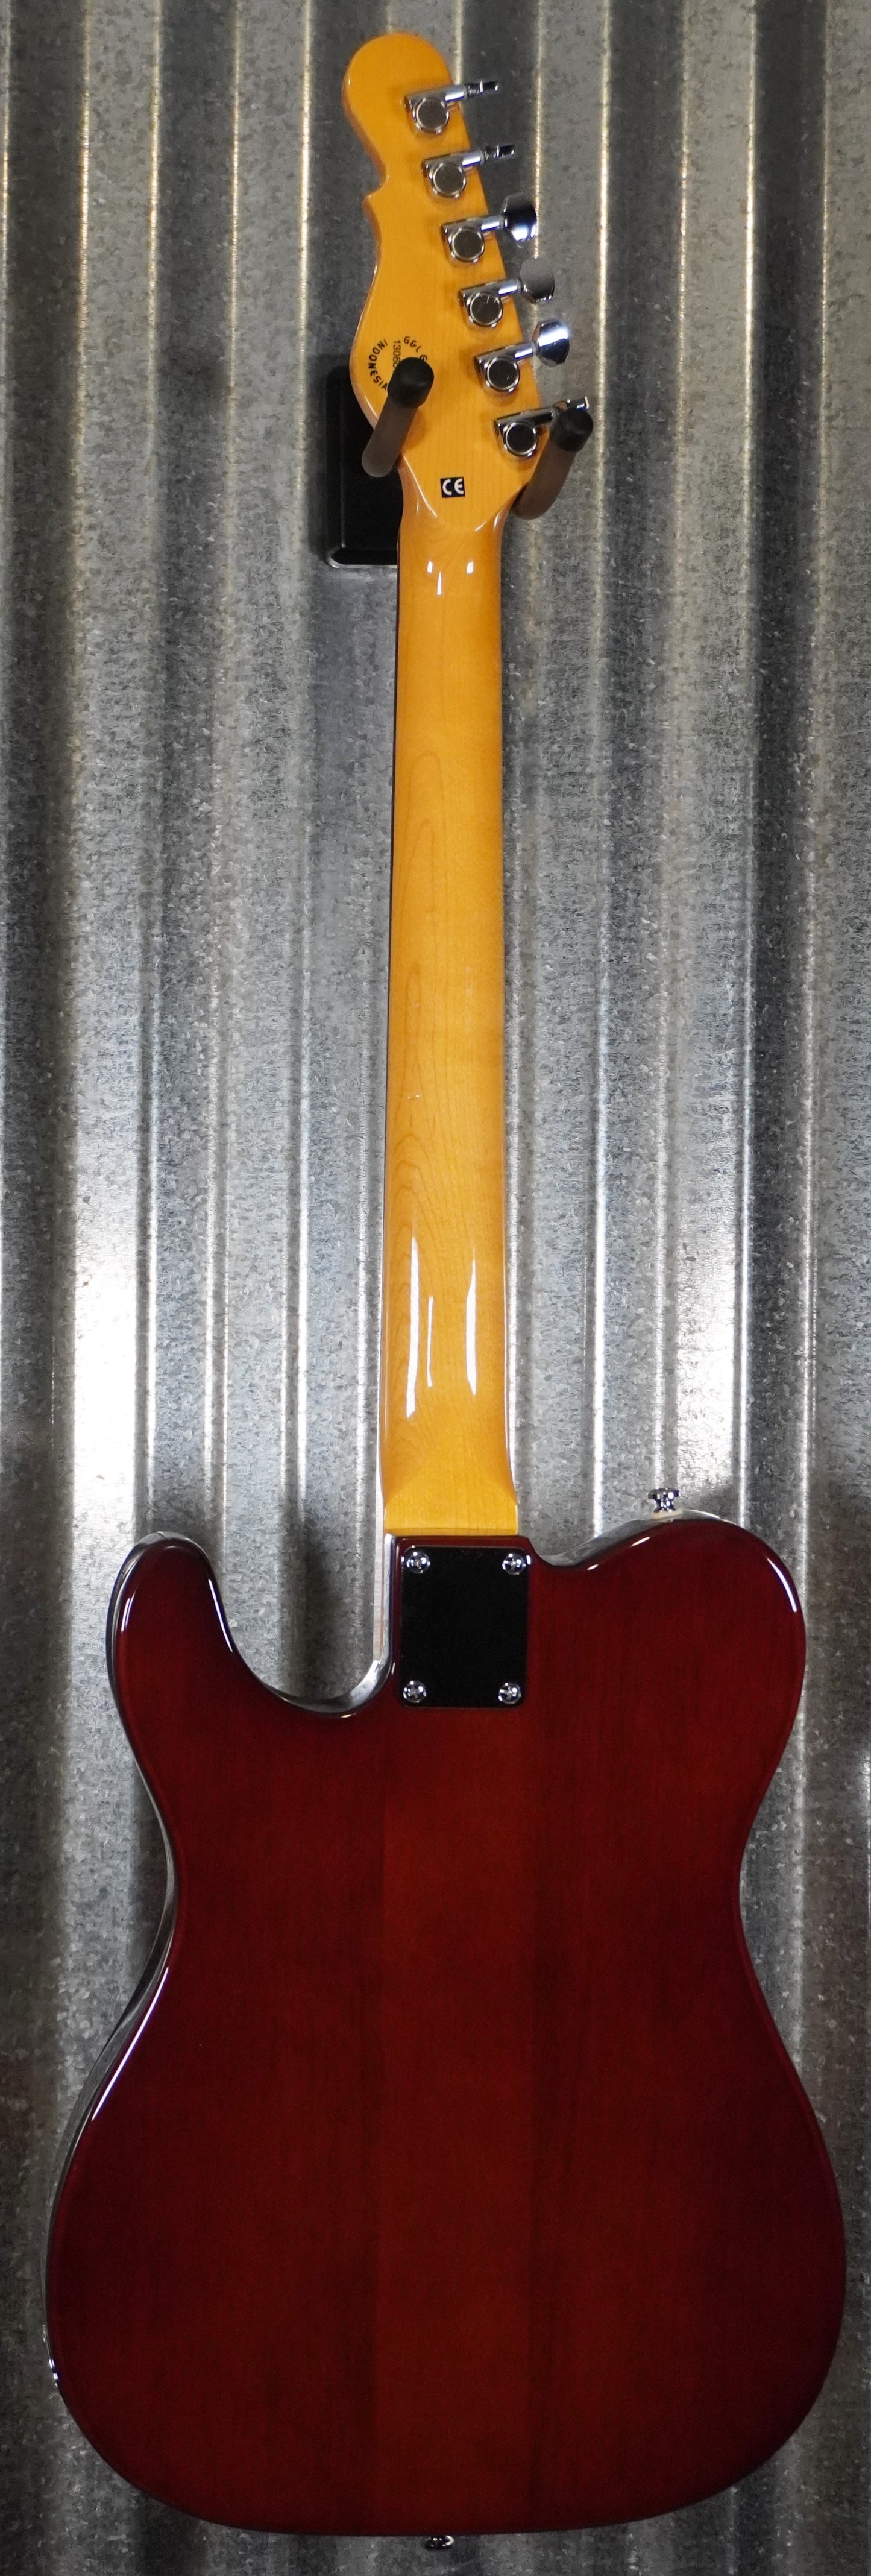 G&L Tribute ASAT Special Tobacco Sunburst Guitar #4533 Used